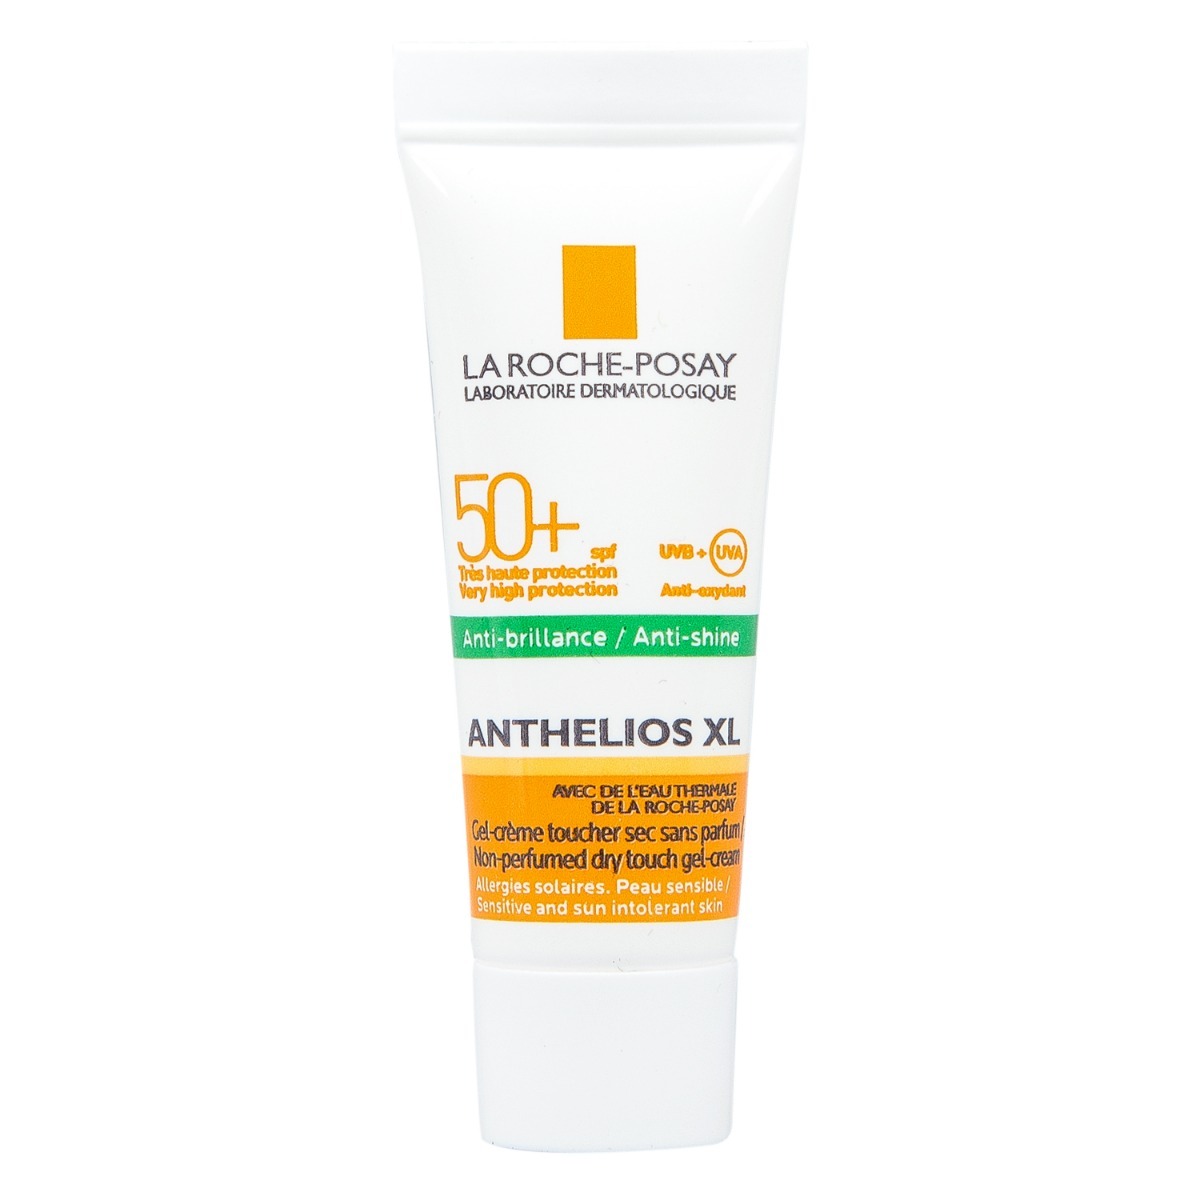 La Roche-Posay Anthelios Xl SPF50+ Dry Touch Gel-Cream Anti-Shine